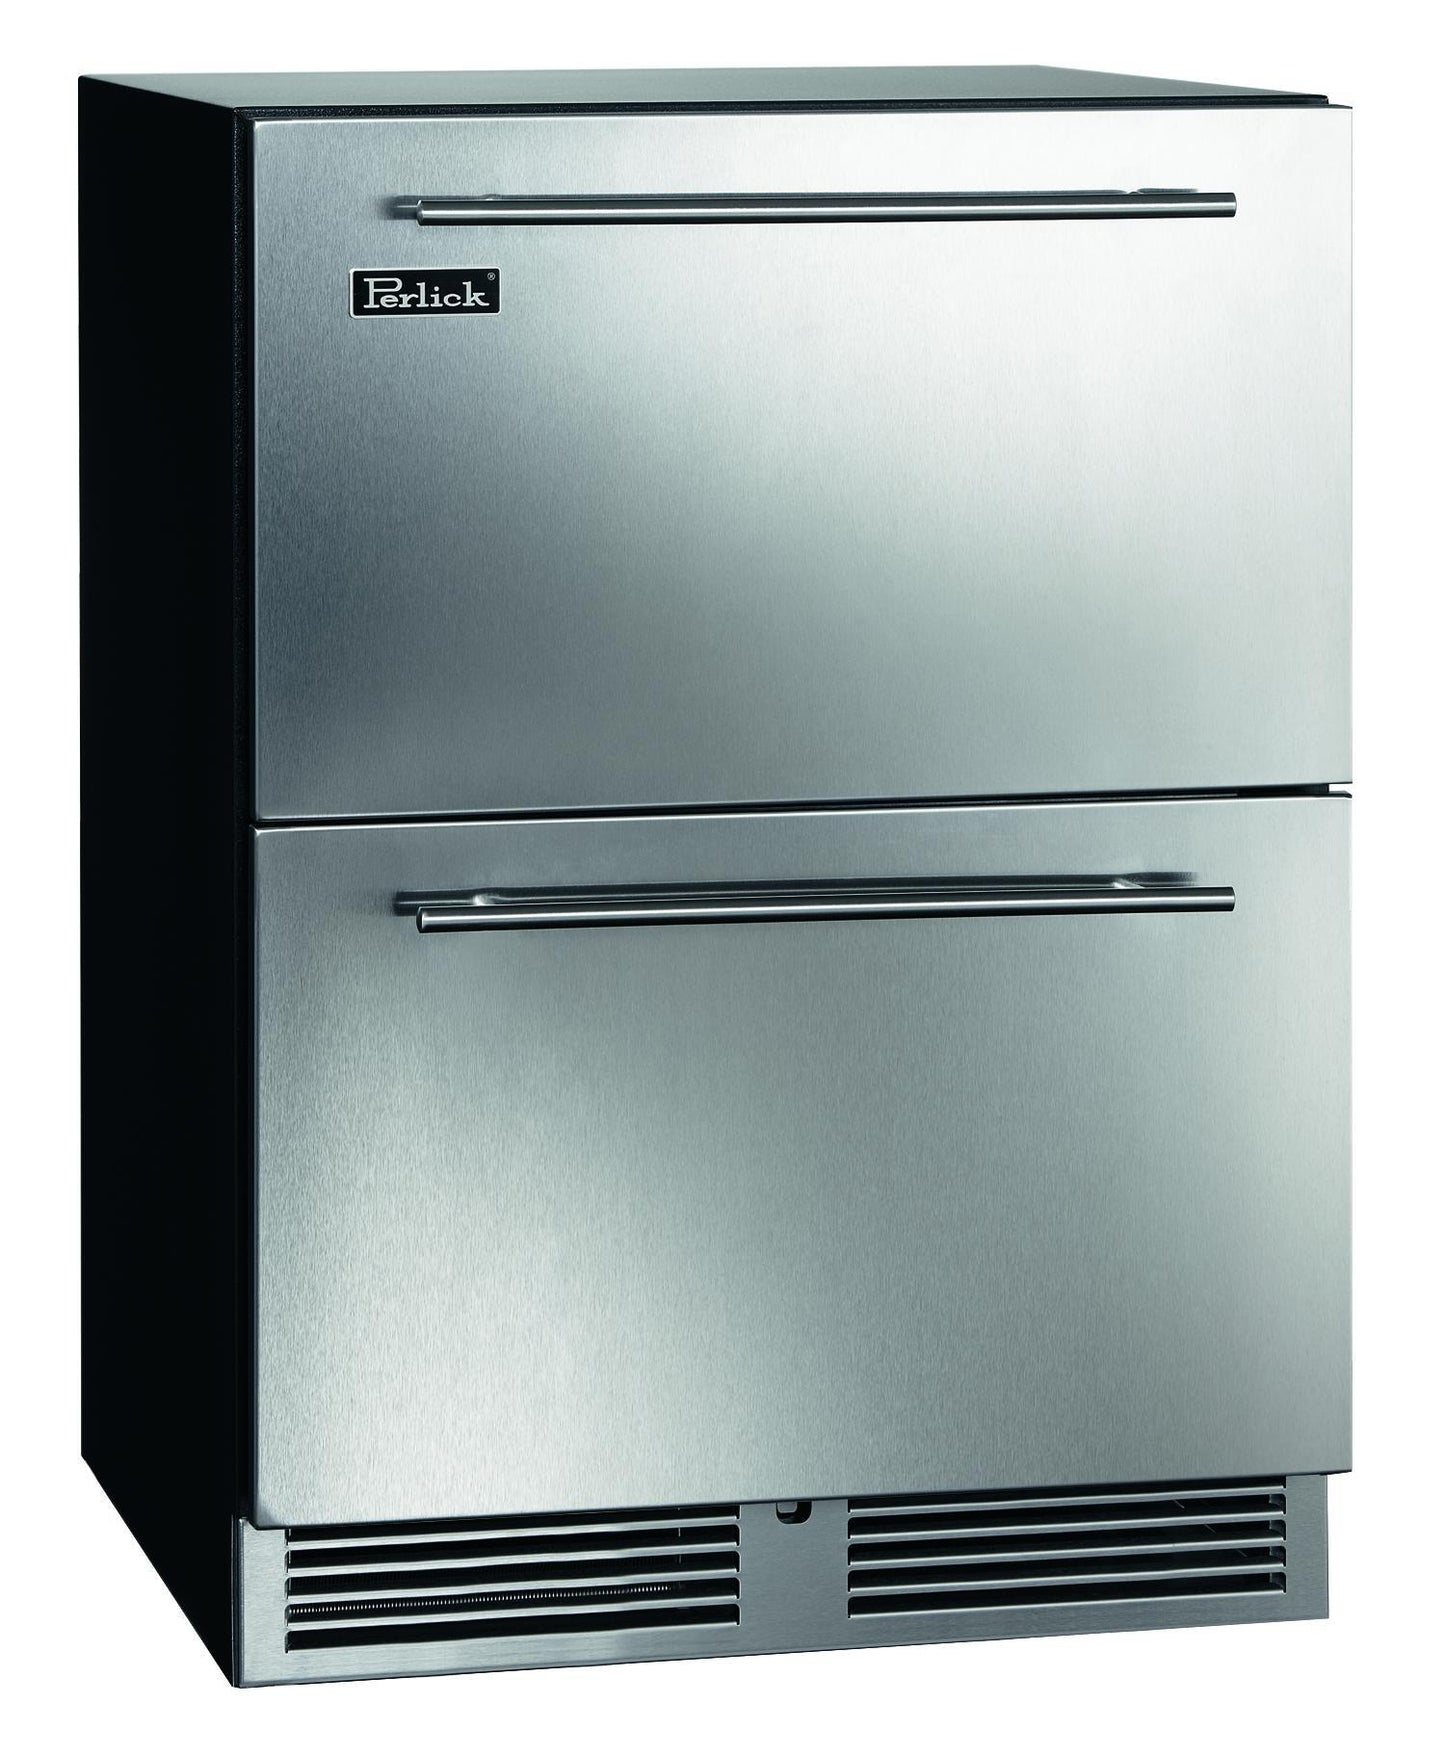 Perlick HC24RB45 24" Refrigerator Drawers